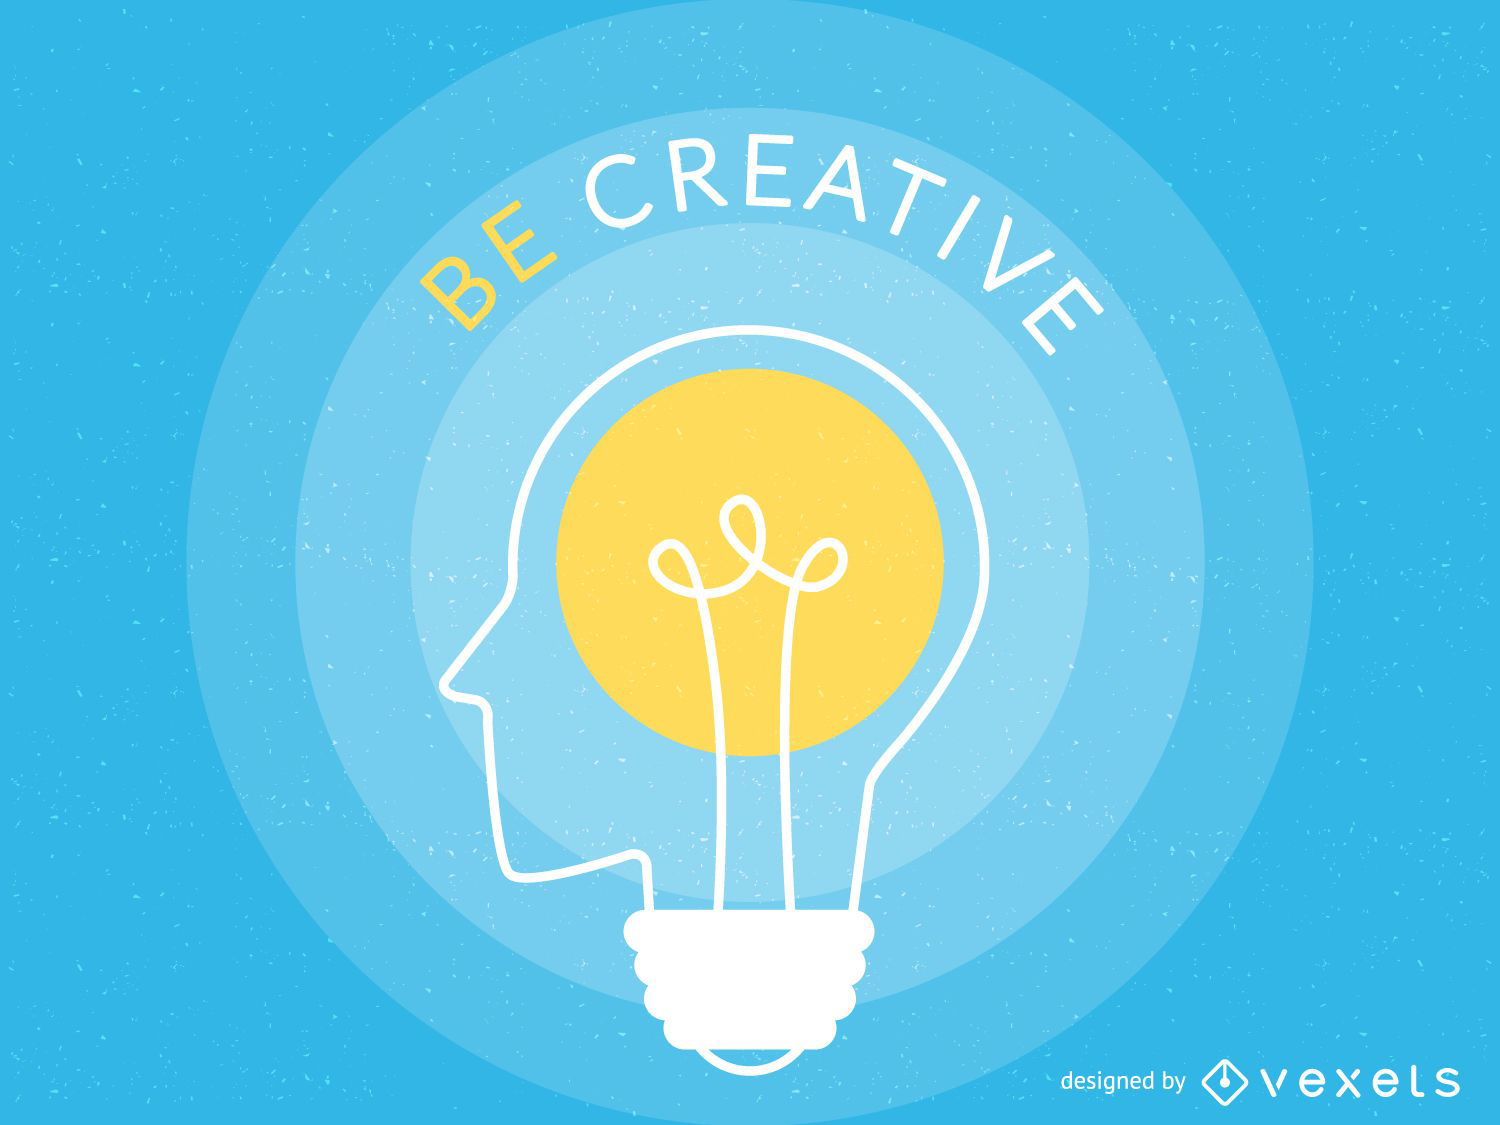 Creativity illustration poster